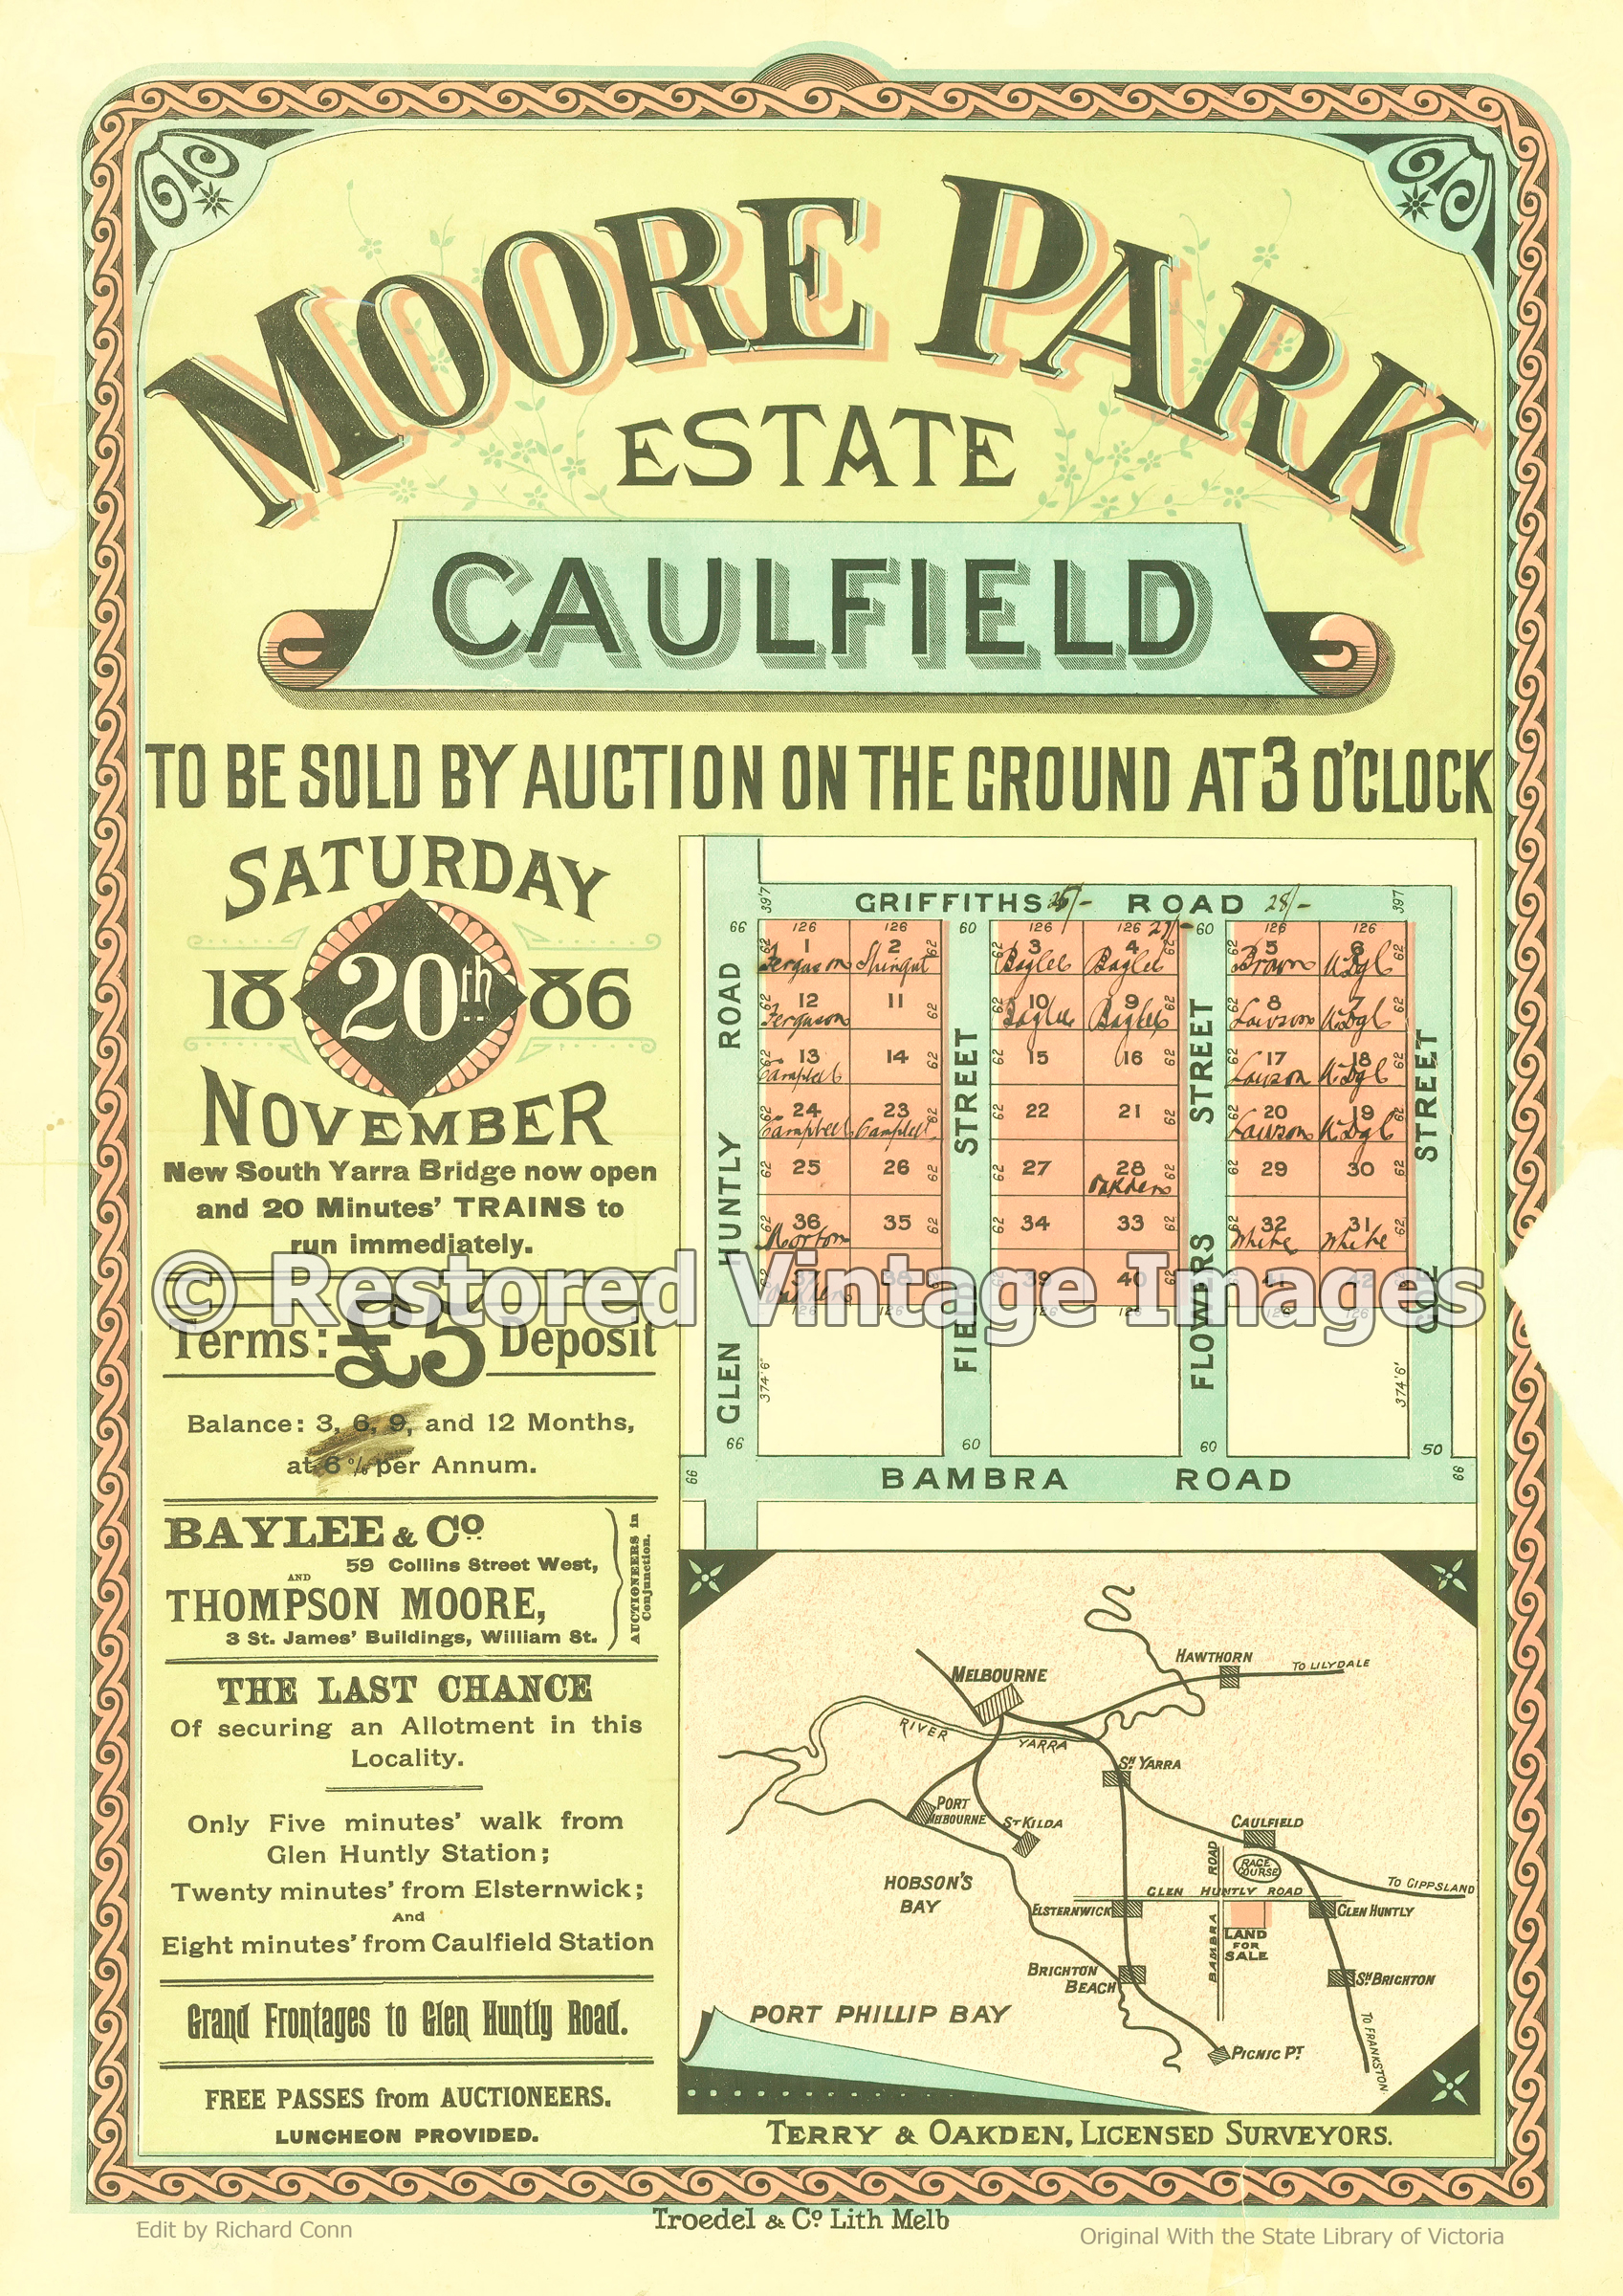 Moore Park Estate Caulfield 1886 – Caulfield South